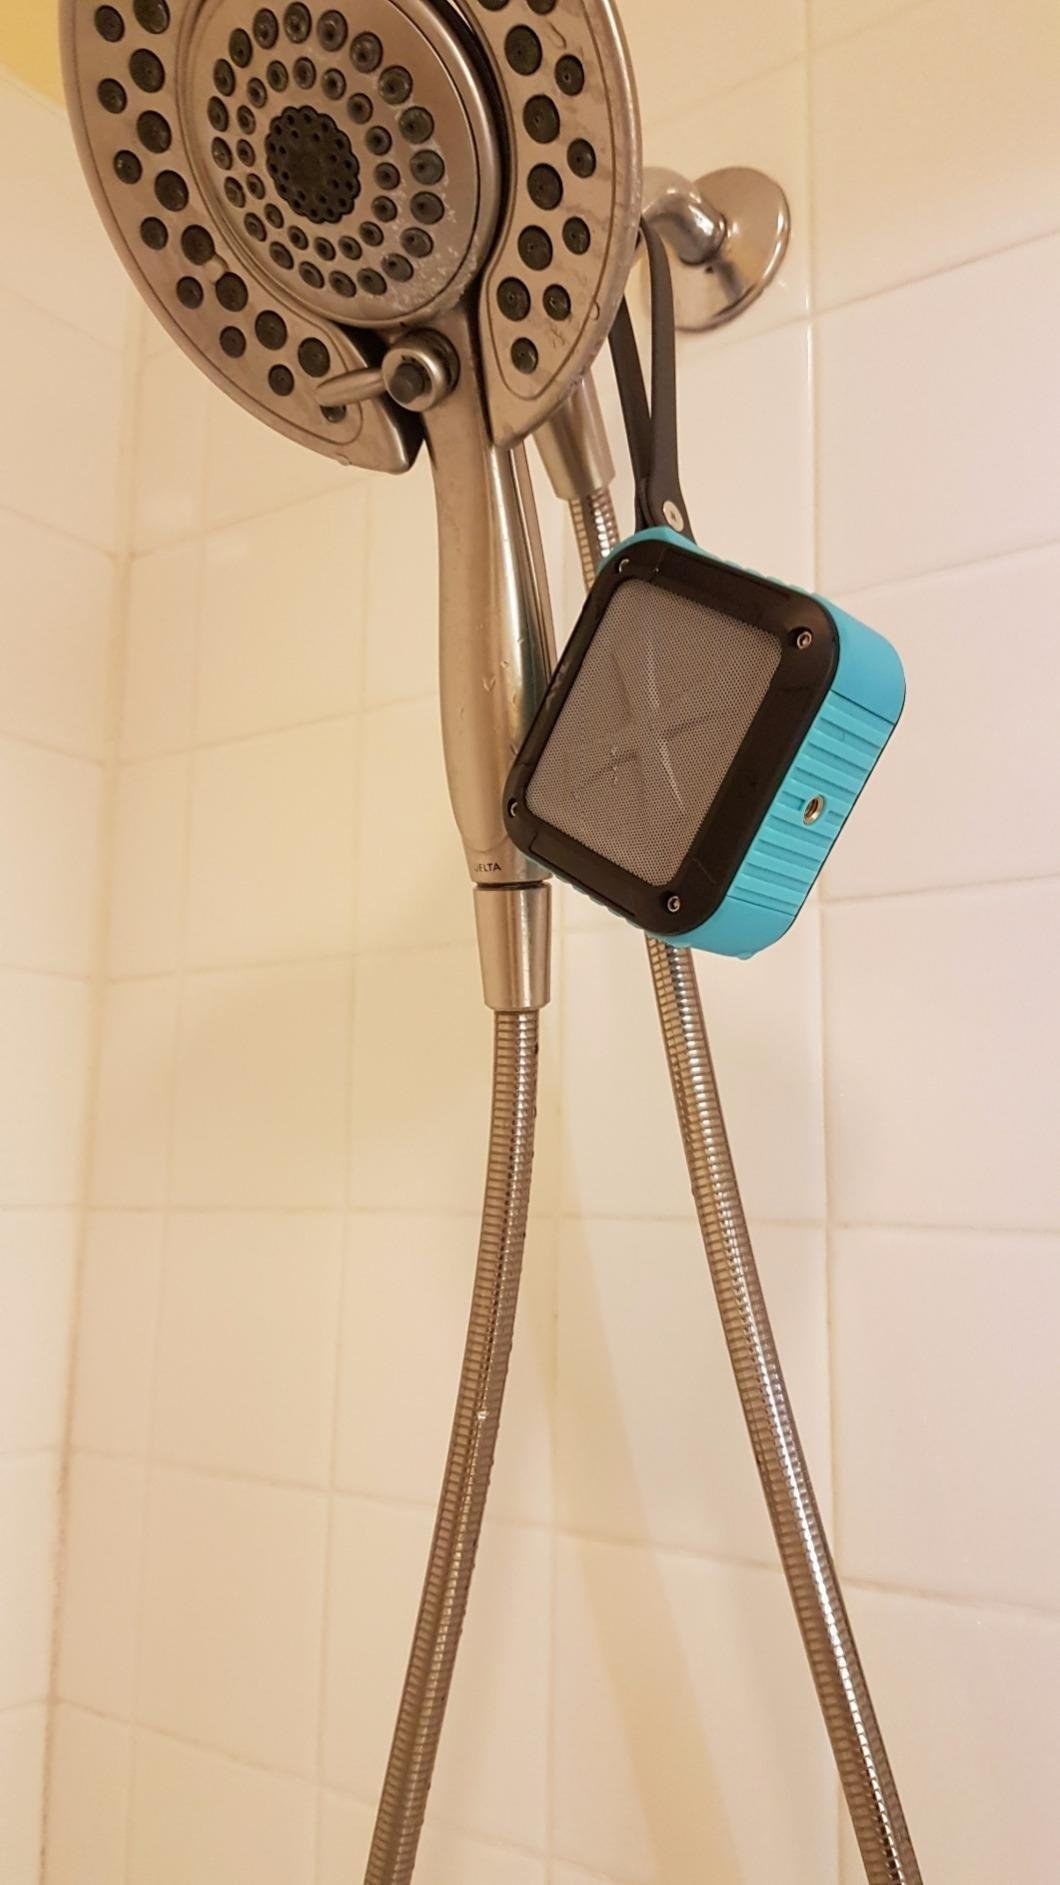 blue speaker hanging on a shower head